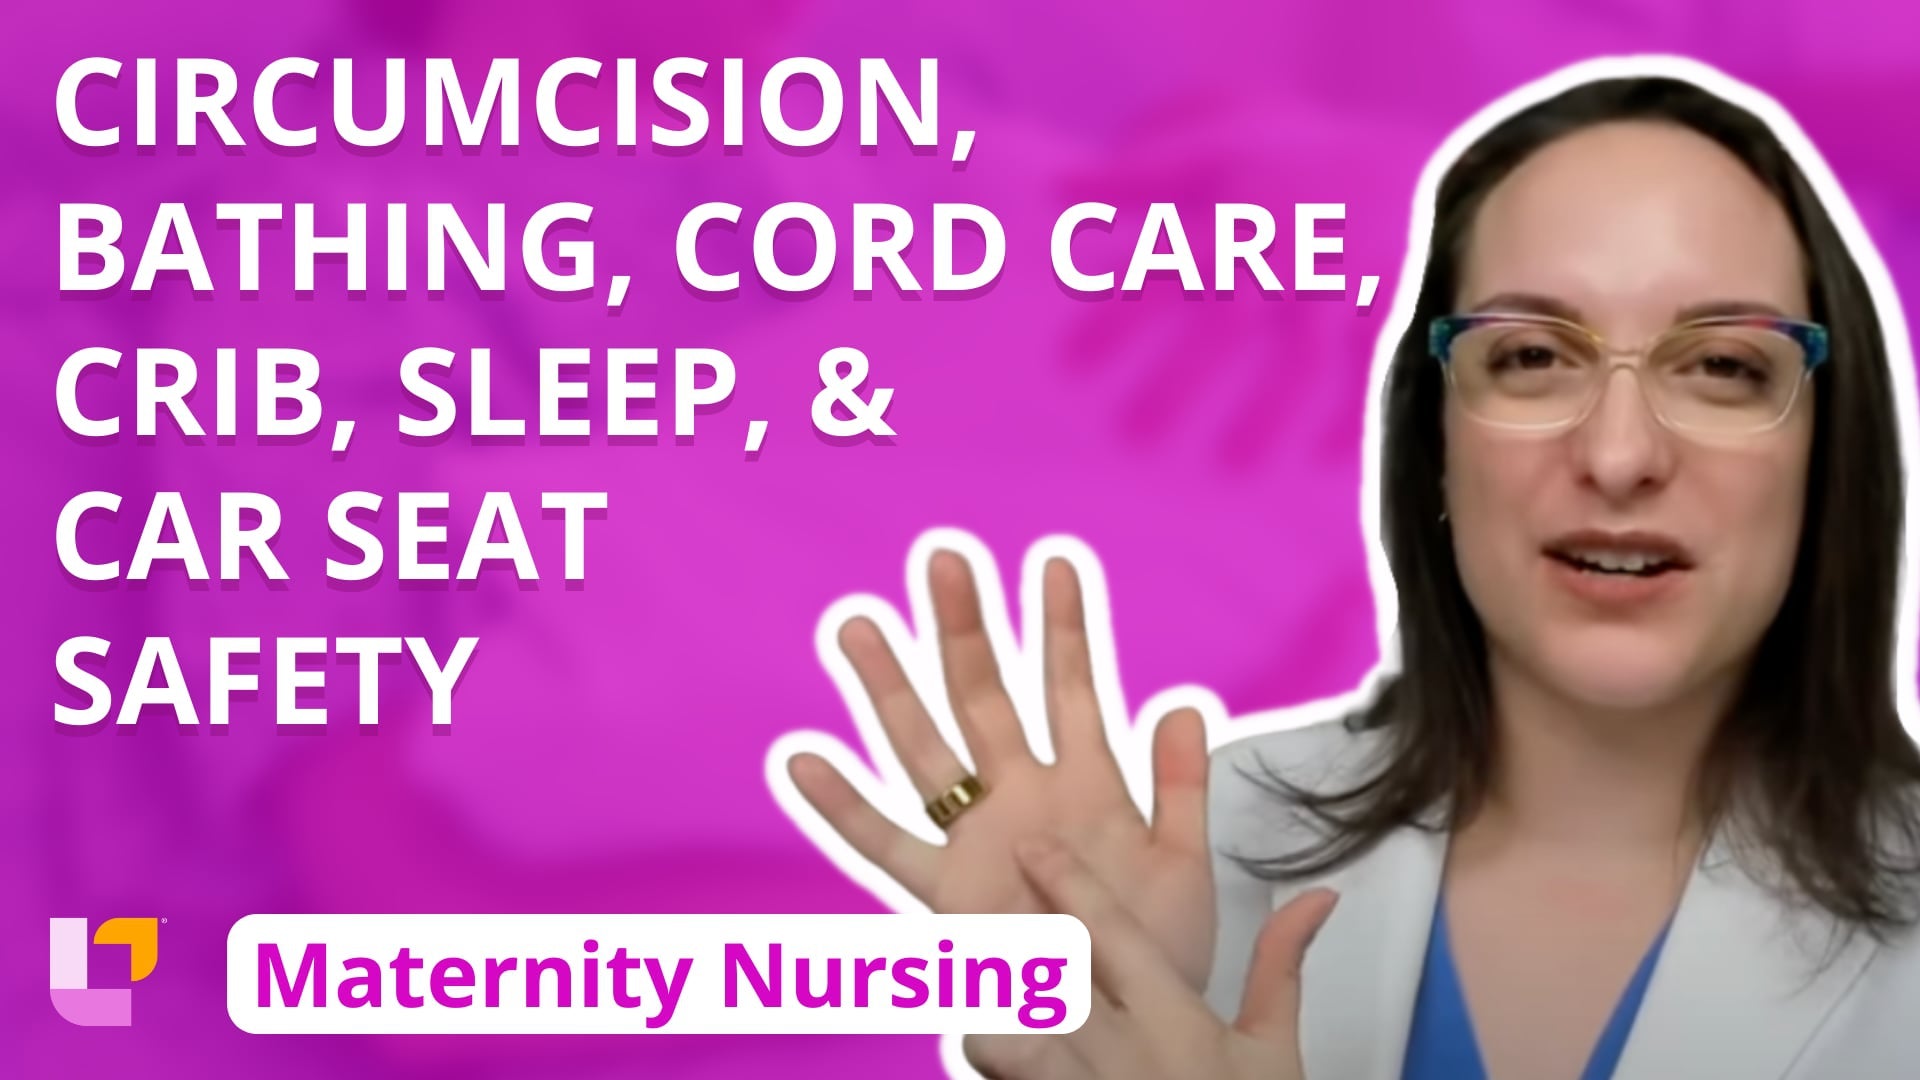 Maternity - Newborn, part 8: Circumcision, Bathing and Cord Care, Crib Safety, Safe Sleep, Car Seat Safety - LevelUpRN